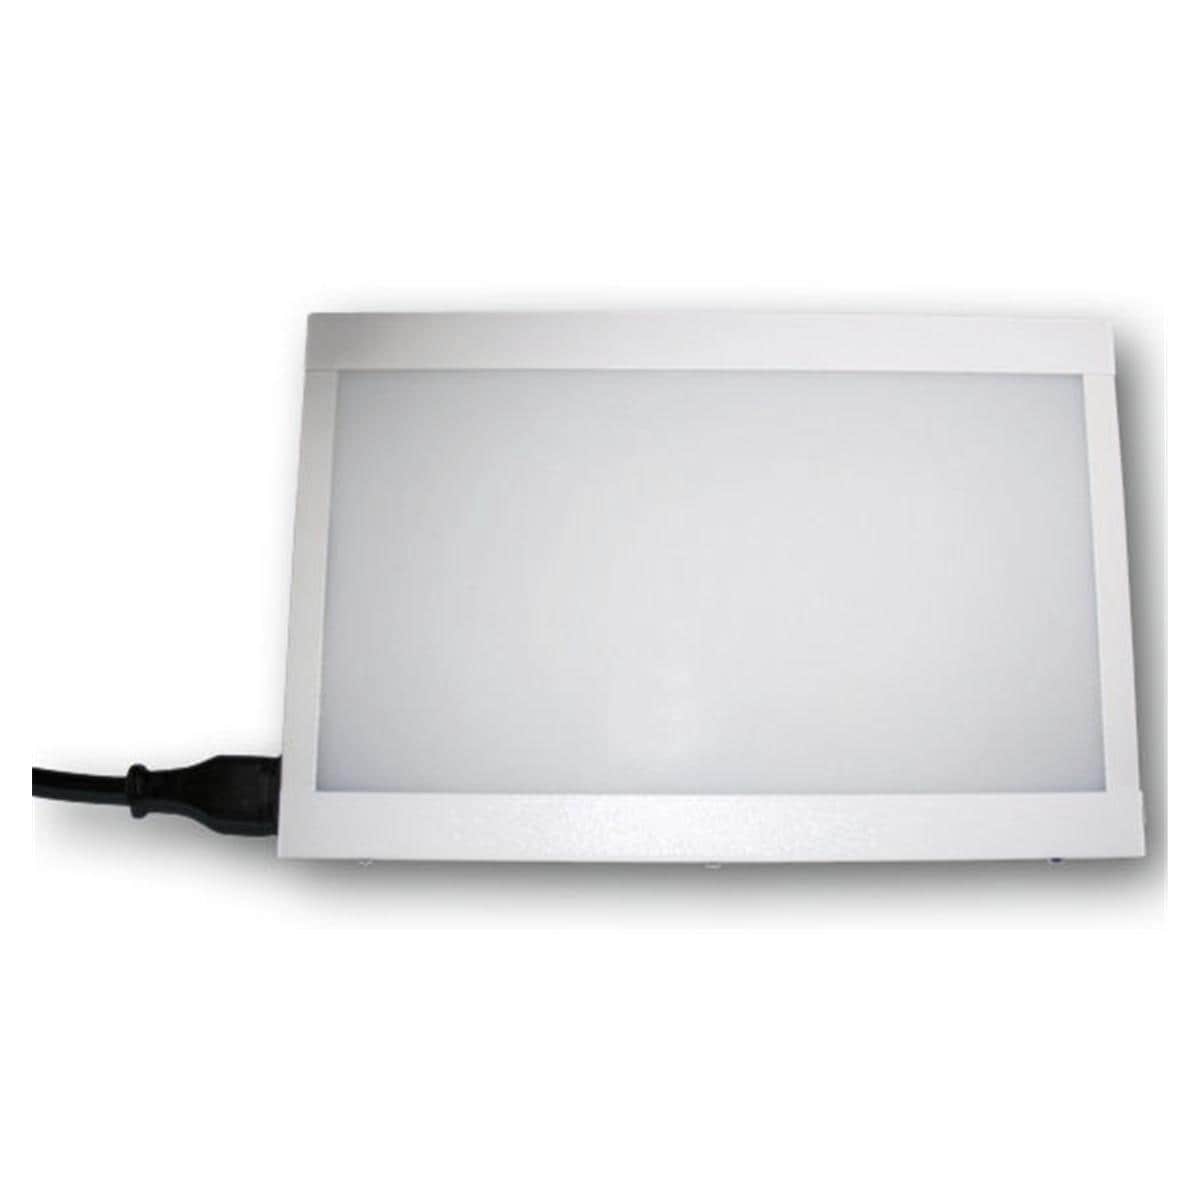 Rntgenviewer XRV - XRV 30, beeld 30 x 16,5 cm - Lamp 2x 8 W